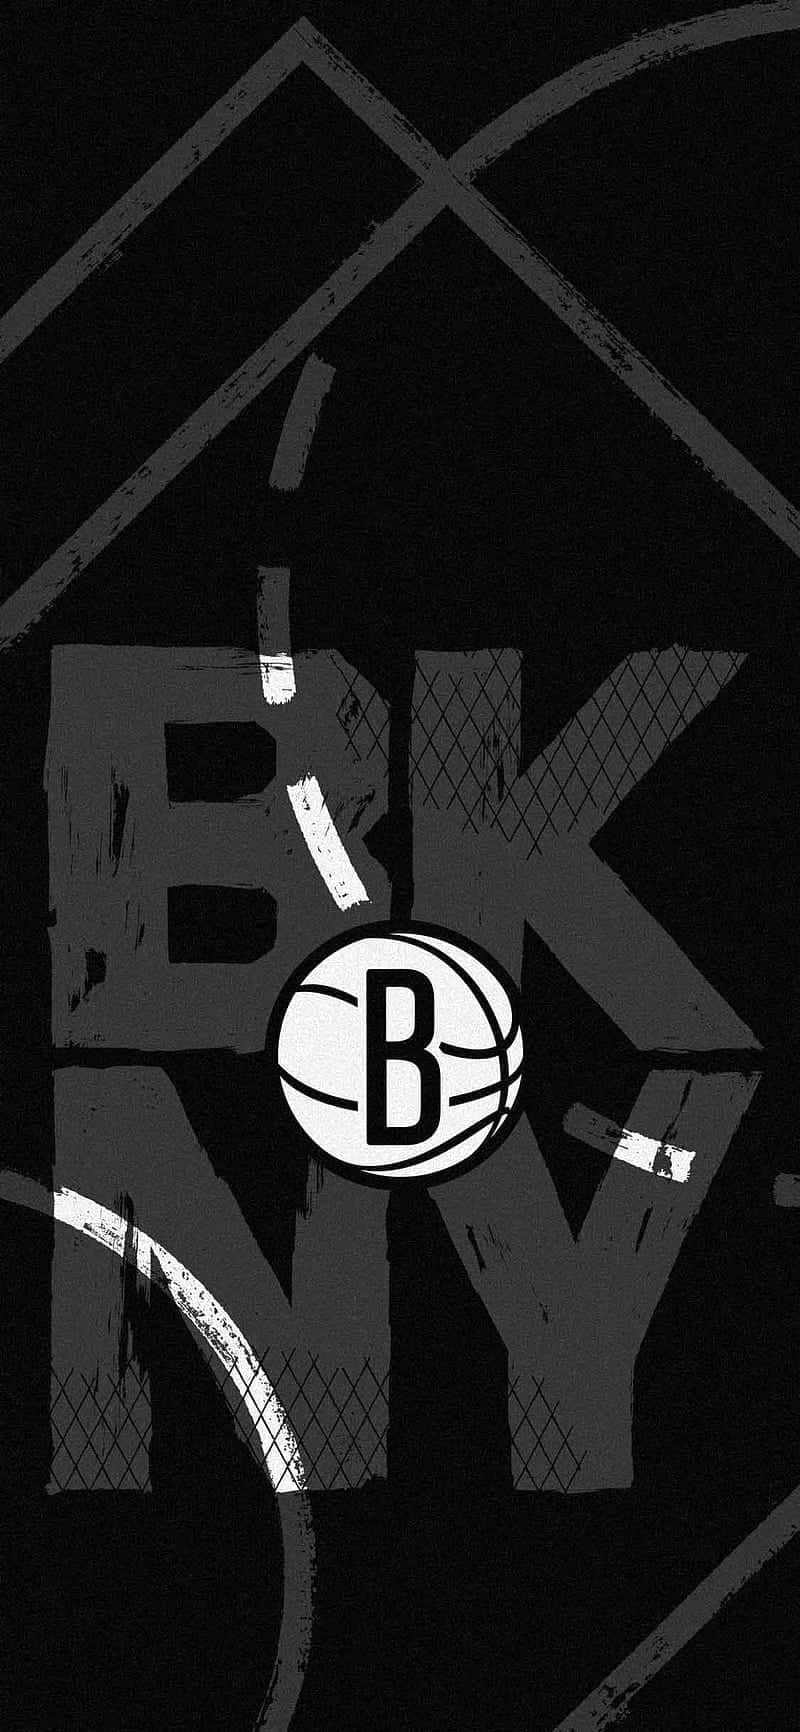 "Building a Winning Team: Brooklyn Nets"